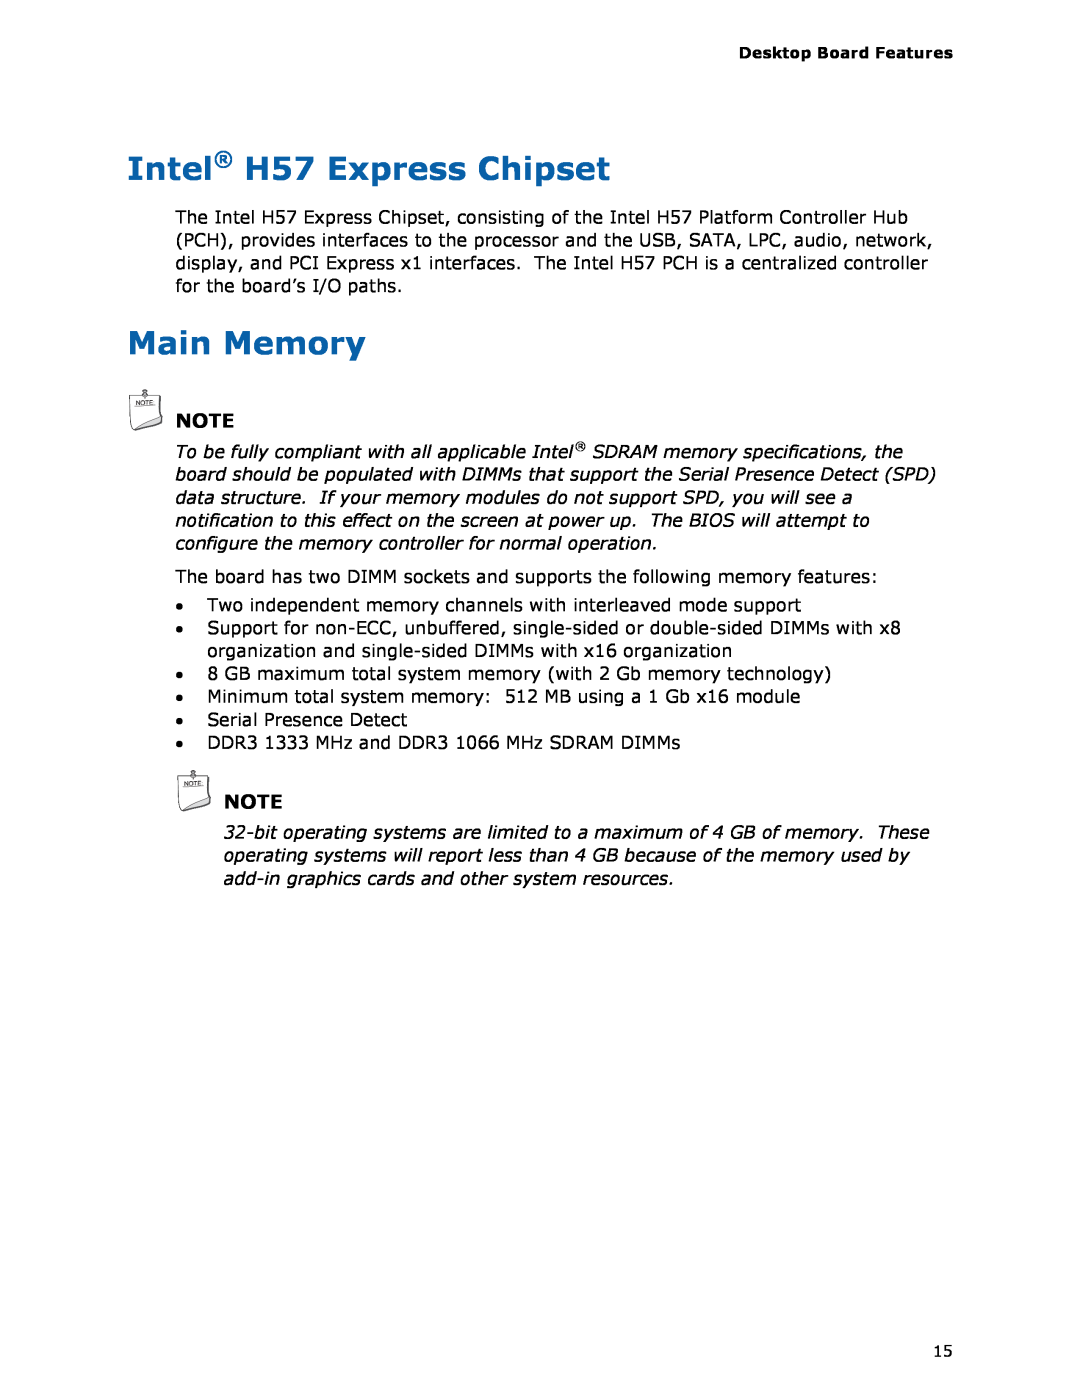 Intel BLKDH57JG manual Intel H57 Express Chipset, Main Memory 